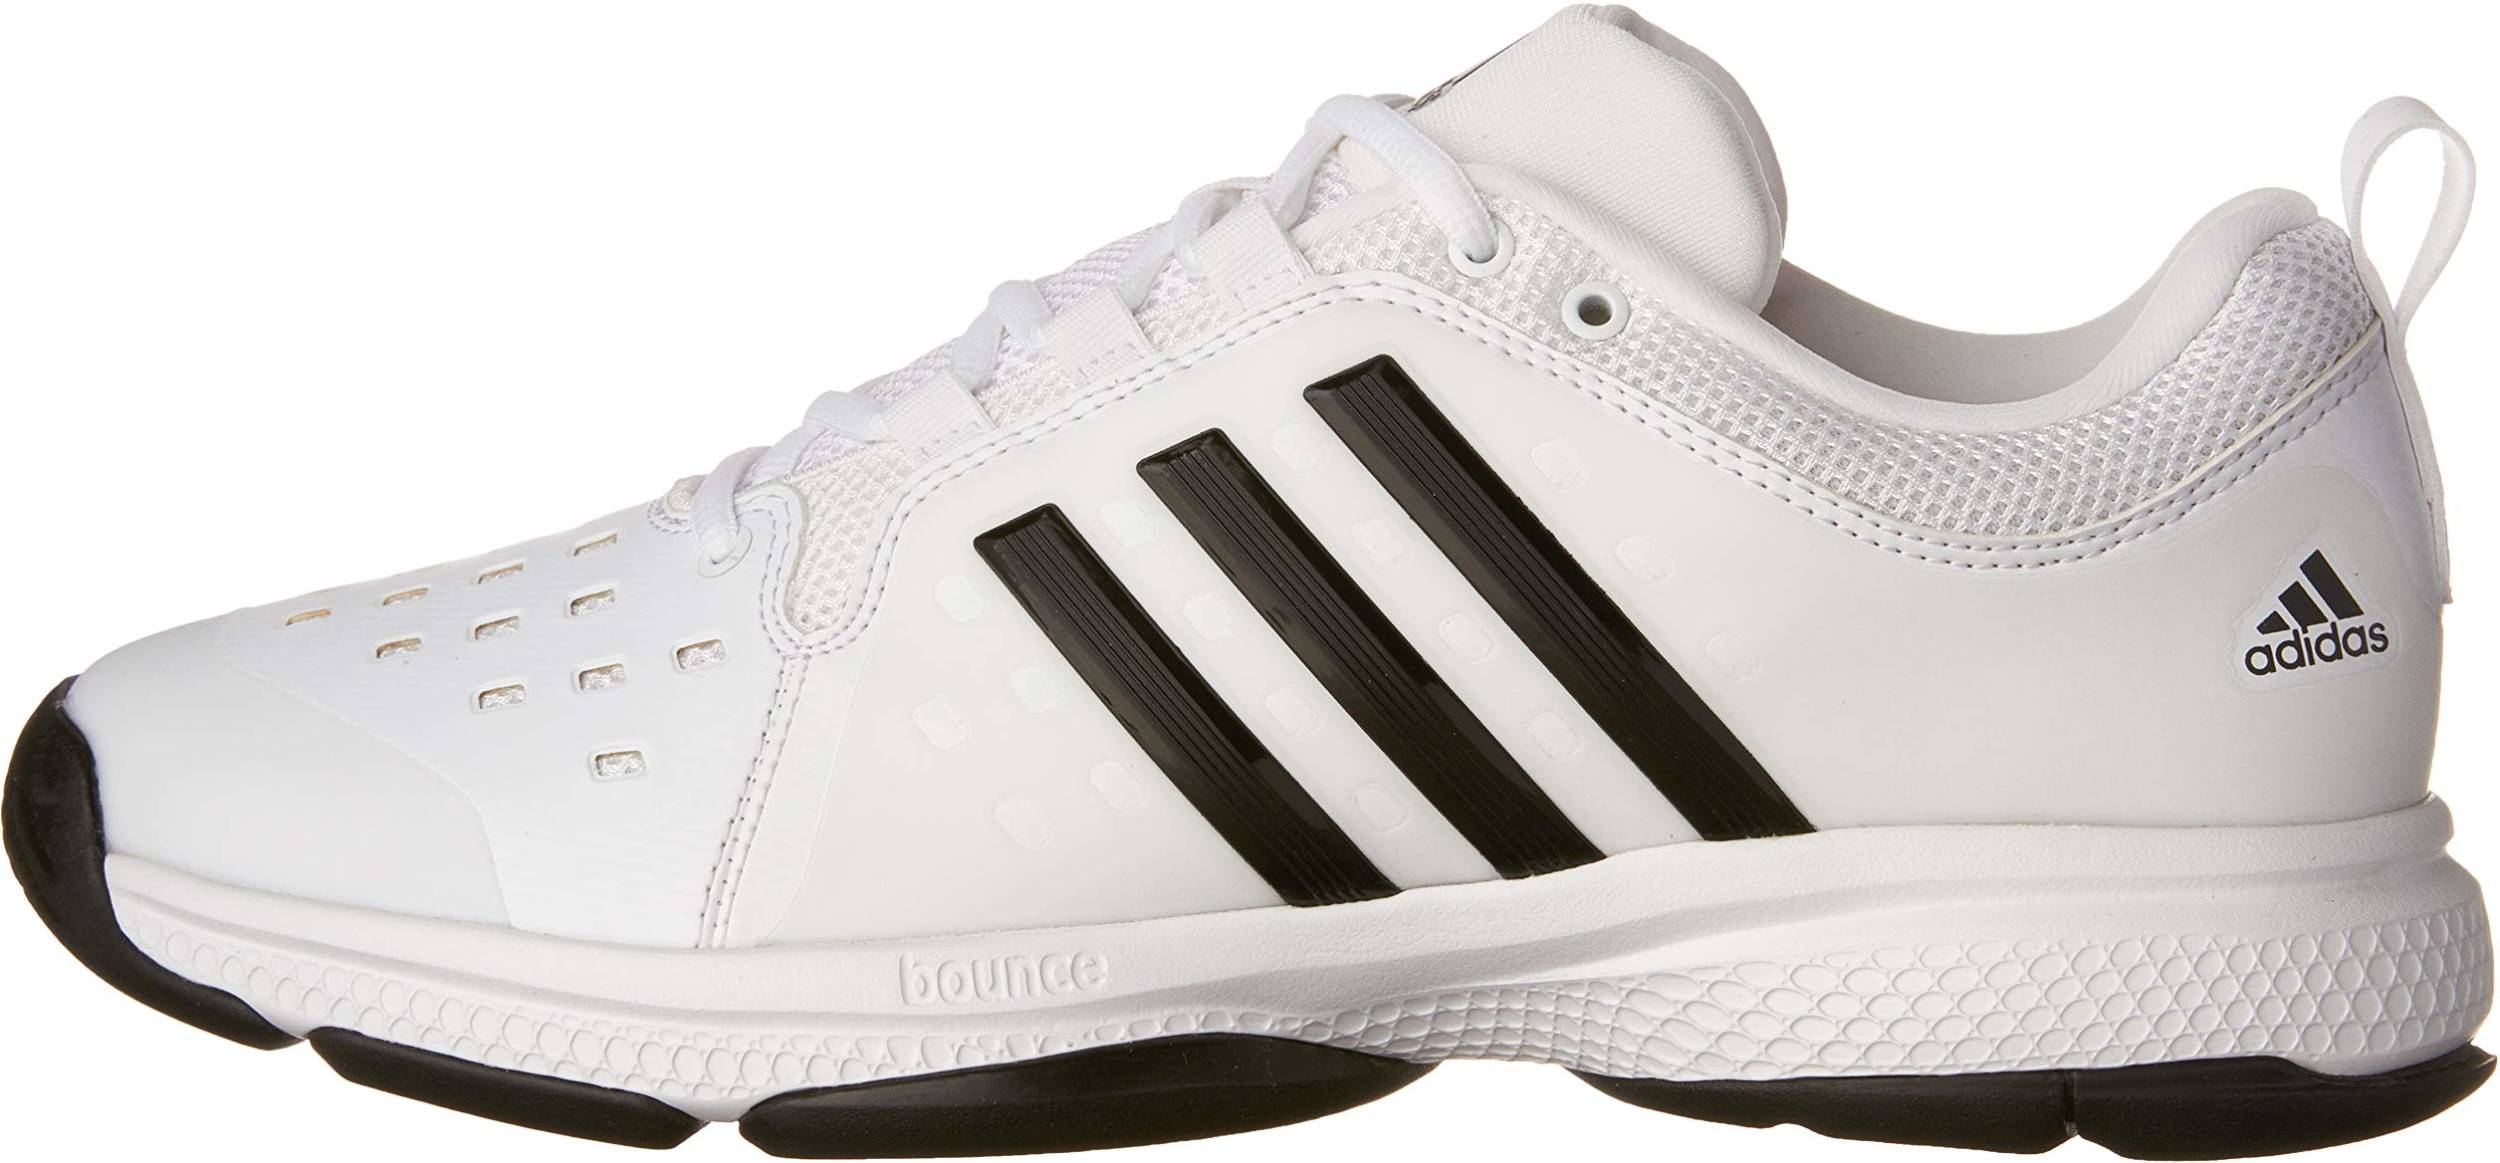 white adidas tennis shoe